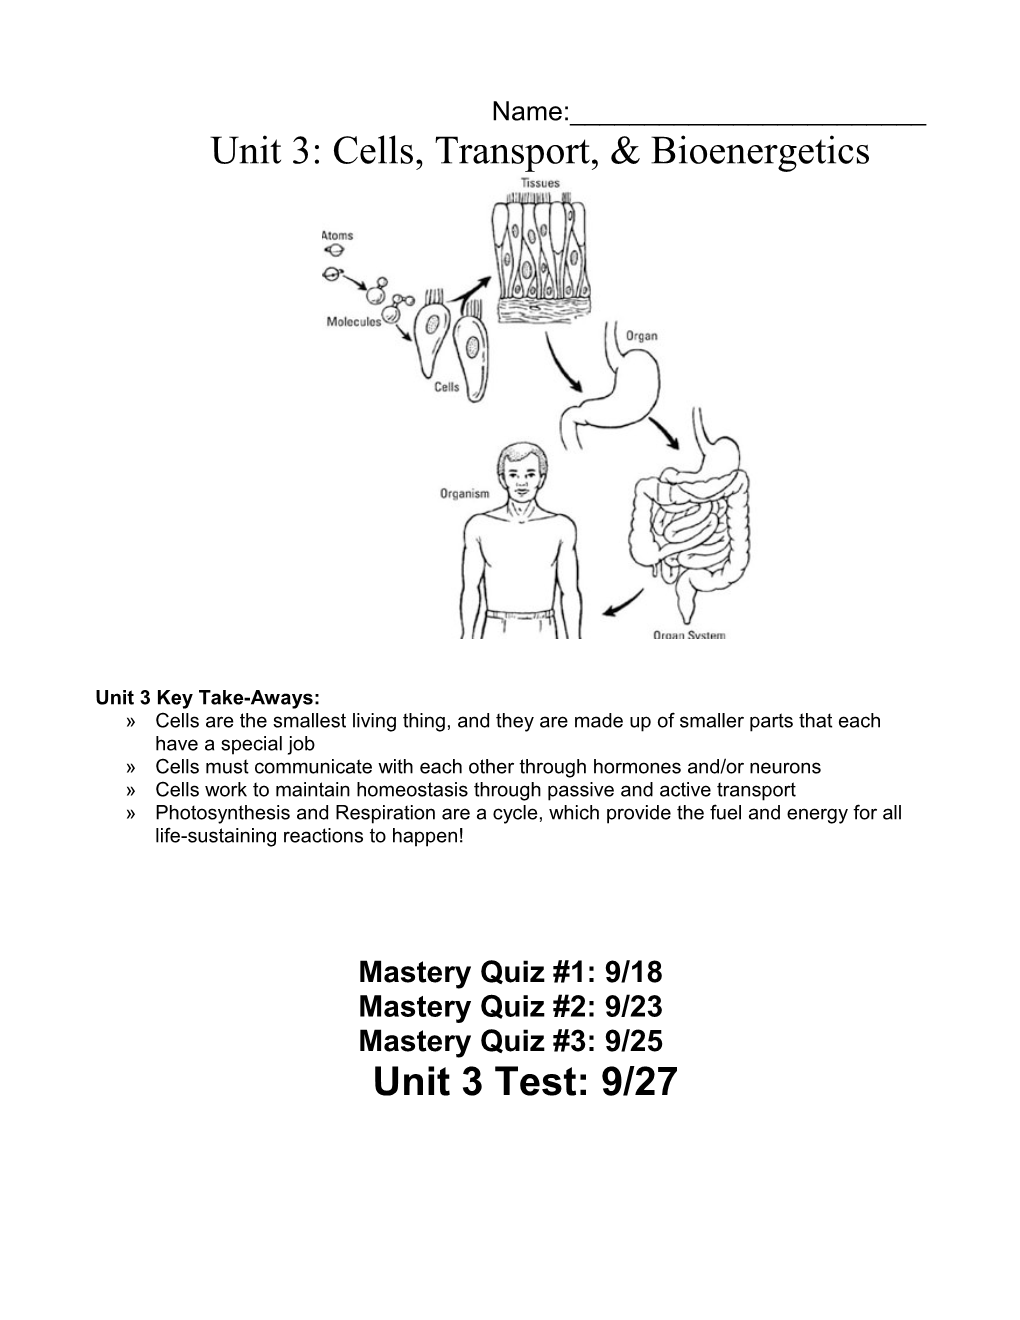 Unit 3: Cells, Transport, & Bioenergetics